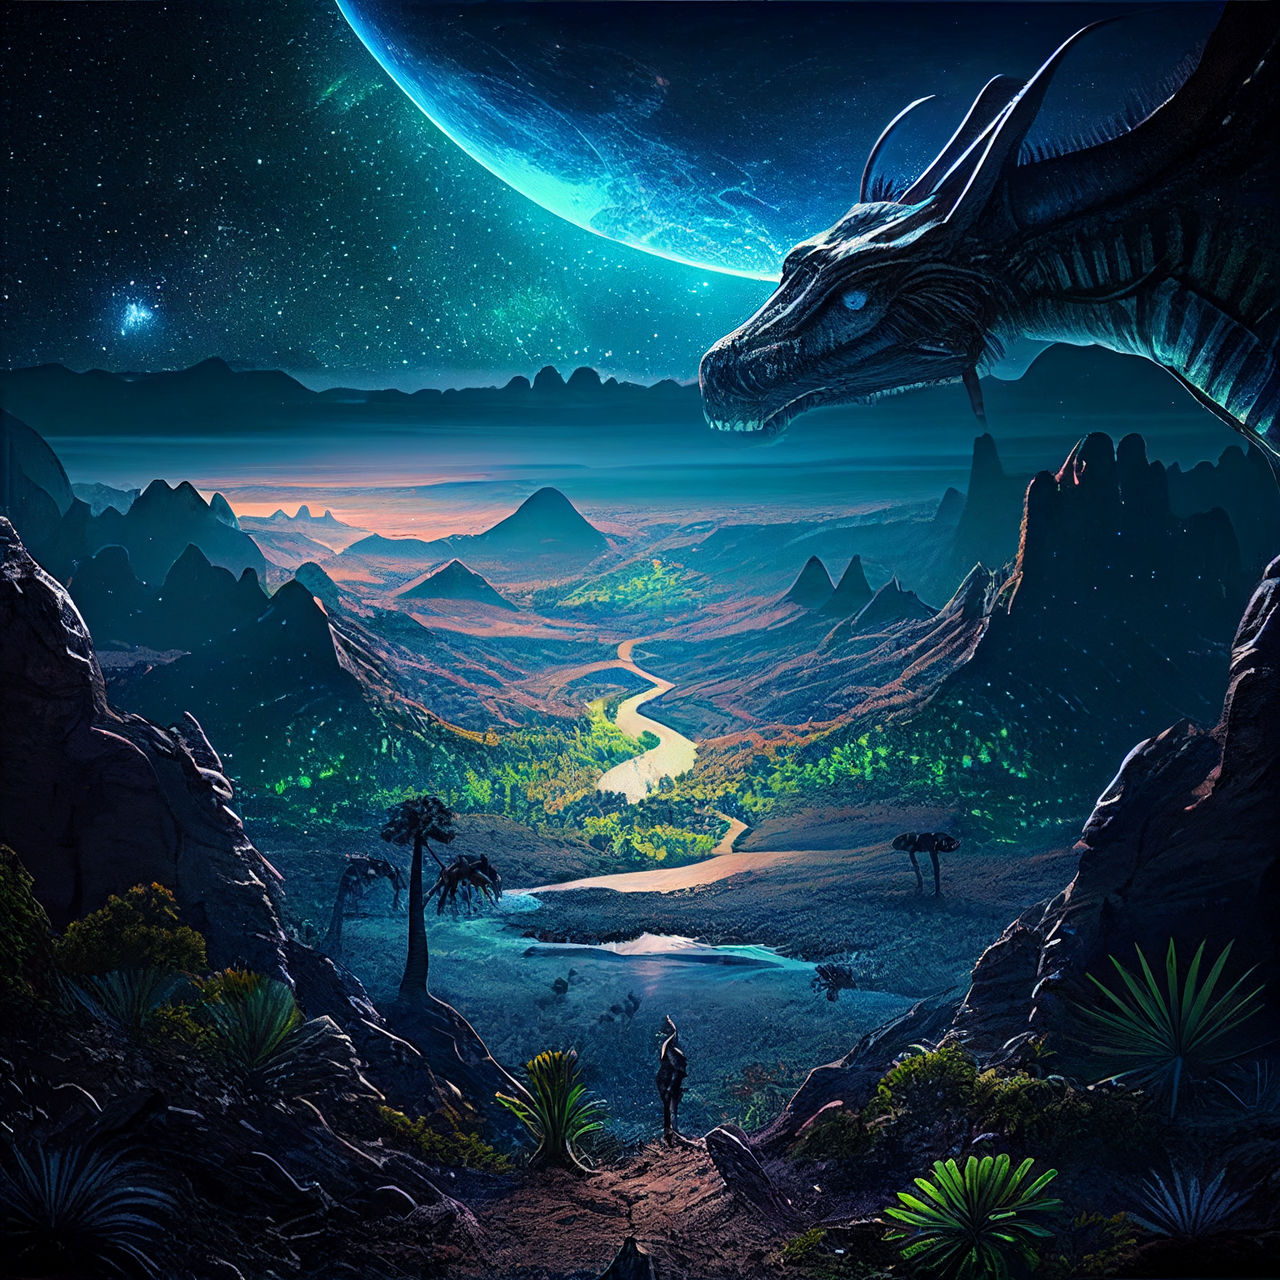 Exoplanet/Exomoon Landscape X by Spectral-Genesis on DeviantArt